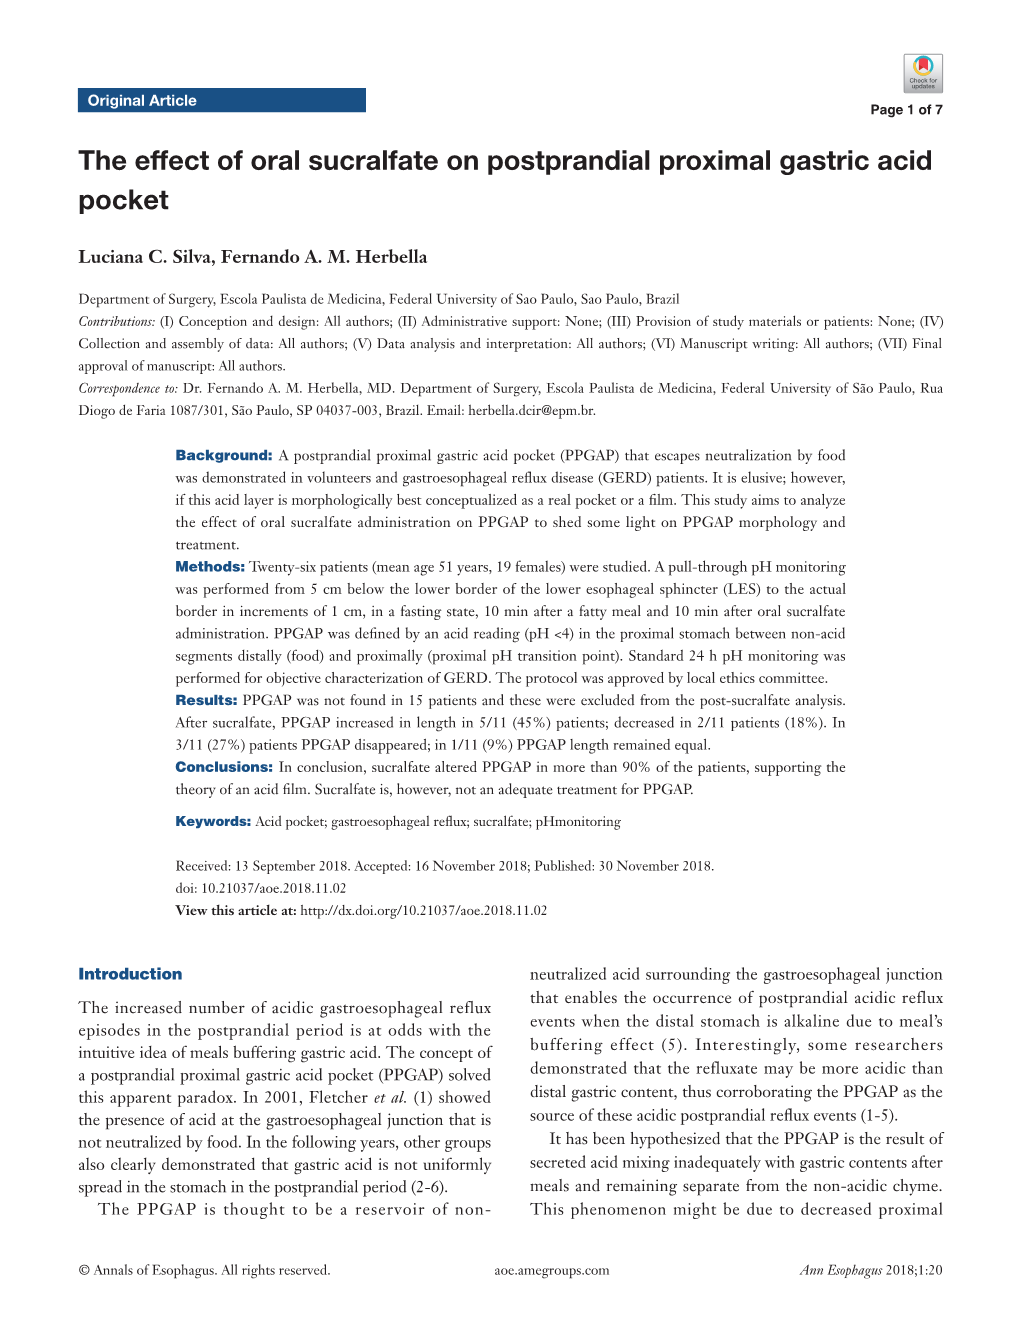 The Effect of Oral Sucralfate on Postprandial Proximal Gastric Acid Pocket